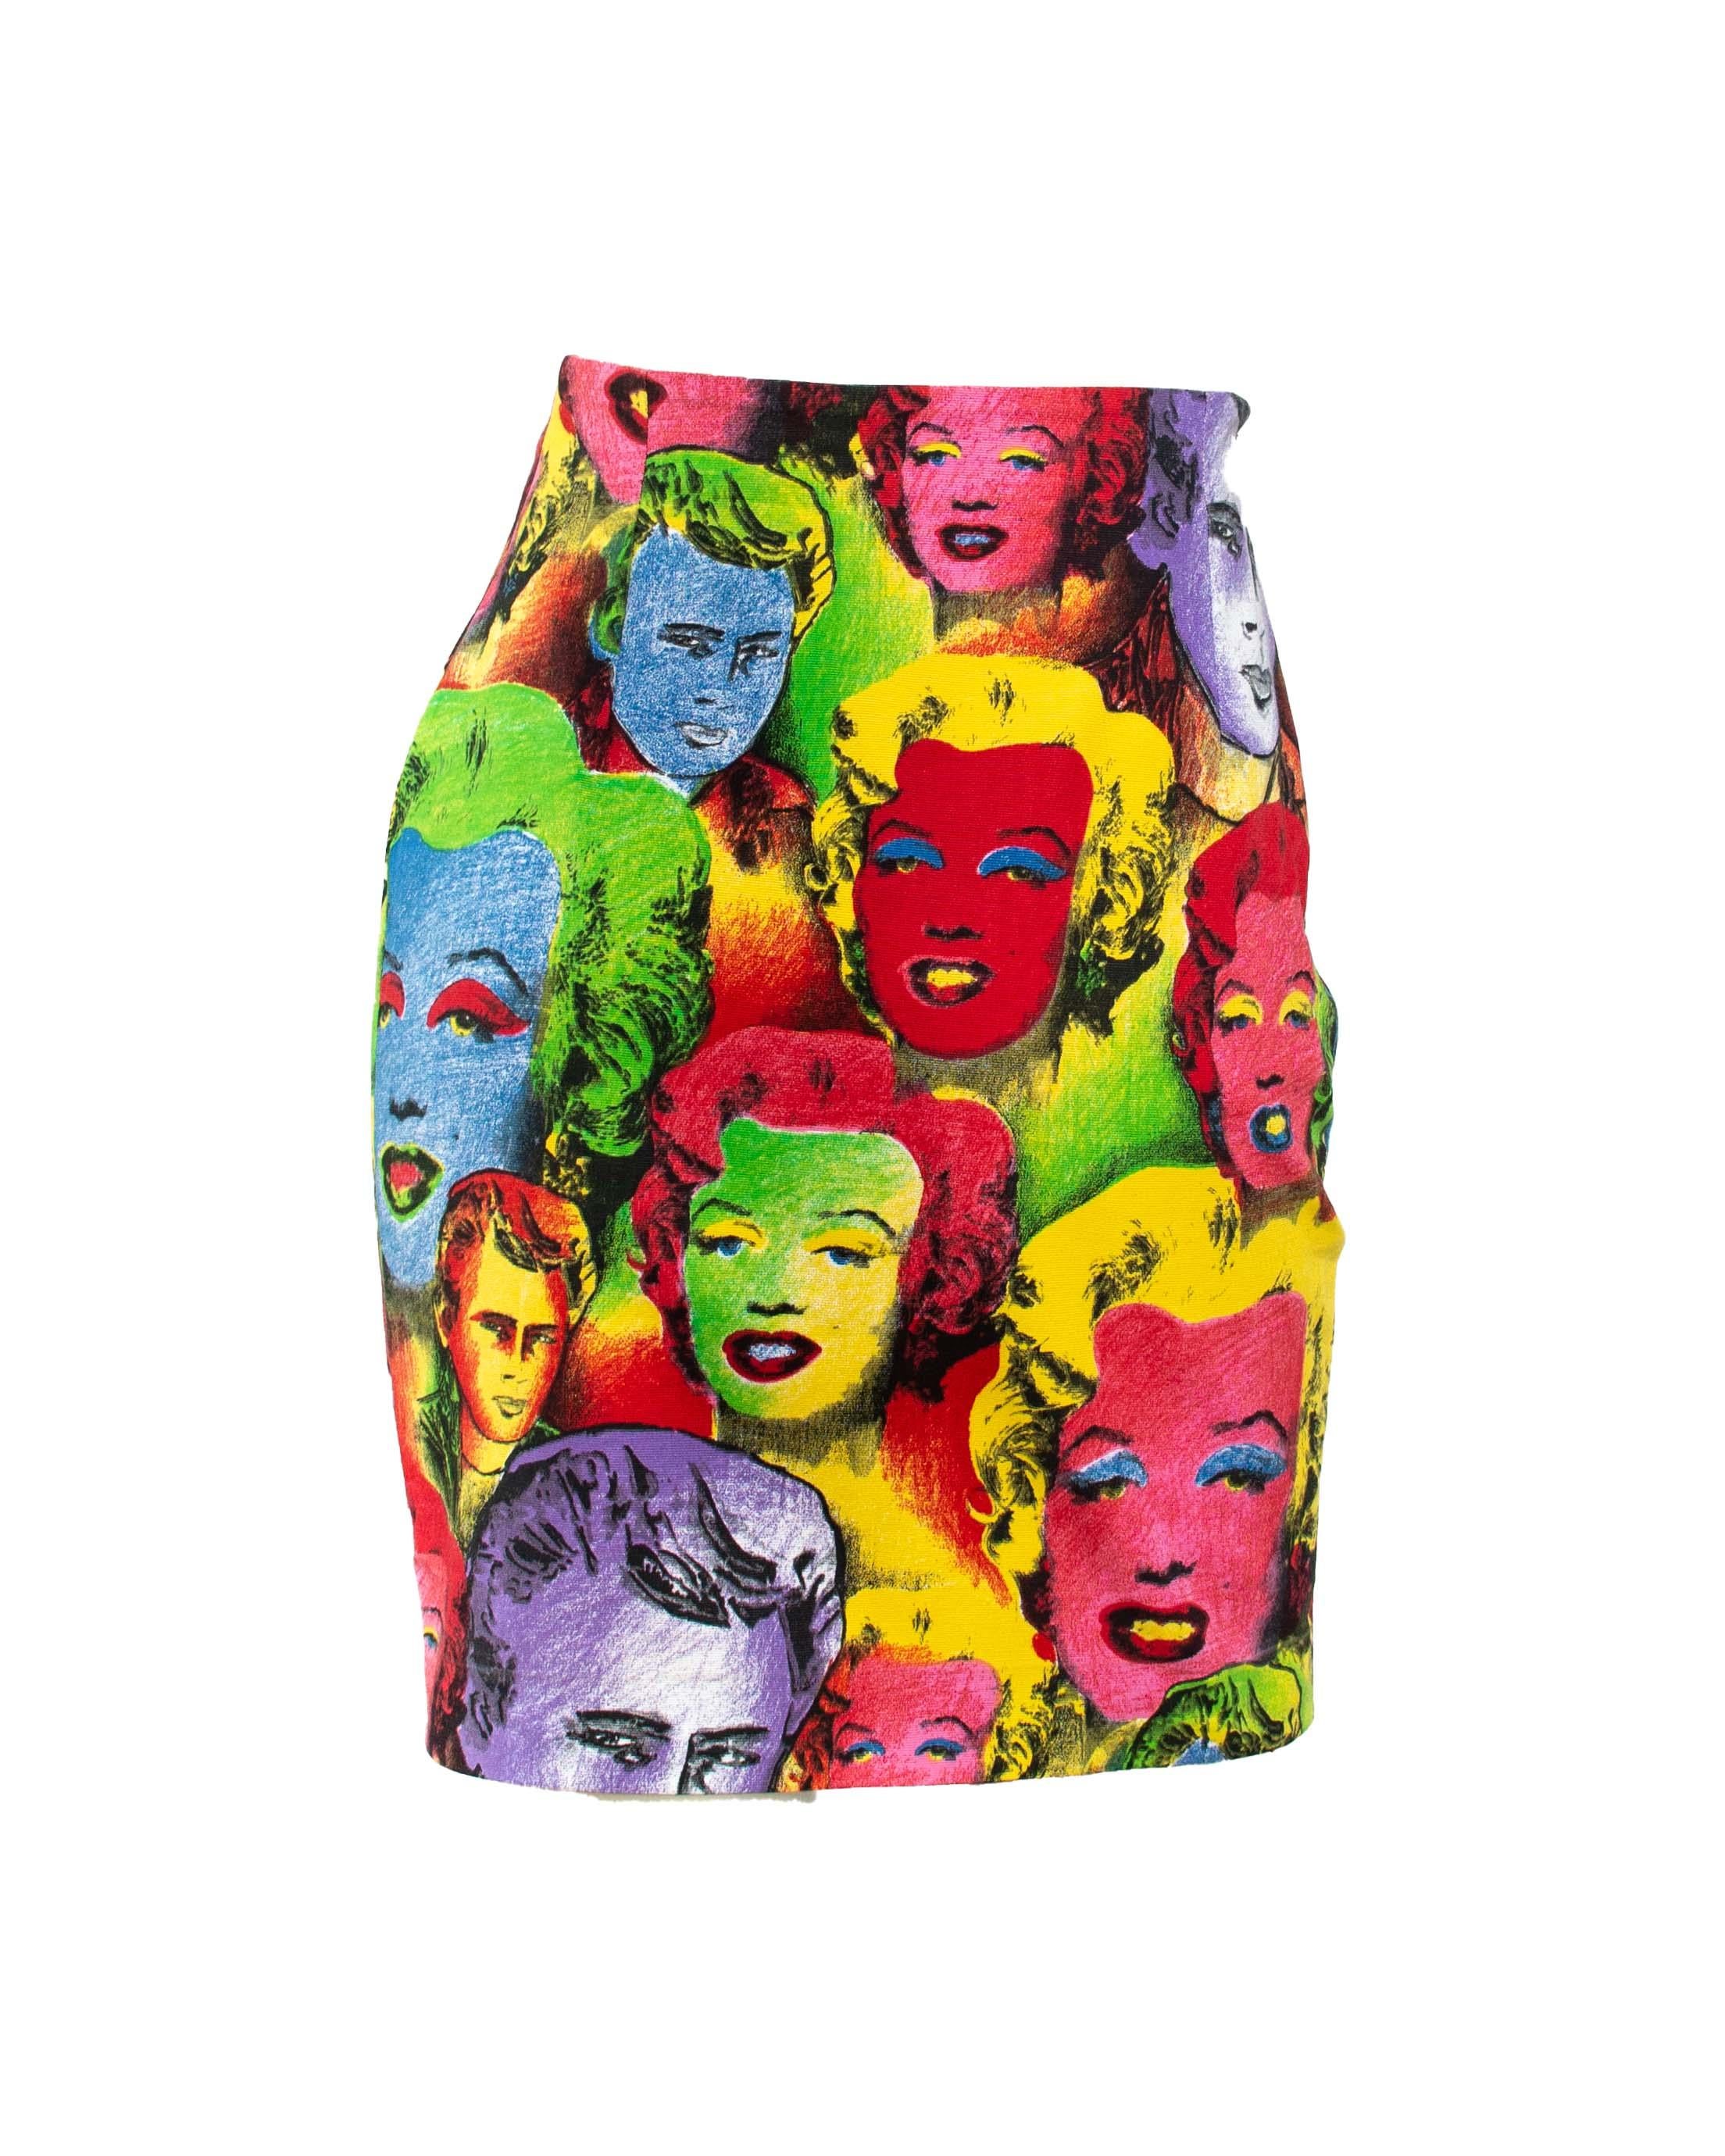 S/S 1991 Gianni Versace Marilyn Monroe Warhol Inspired Print Pop Art Skirt Suit For Sale 3